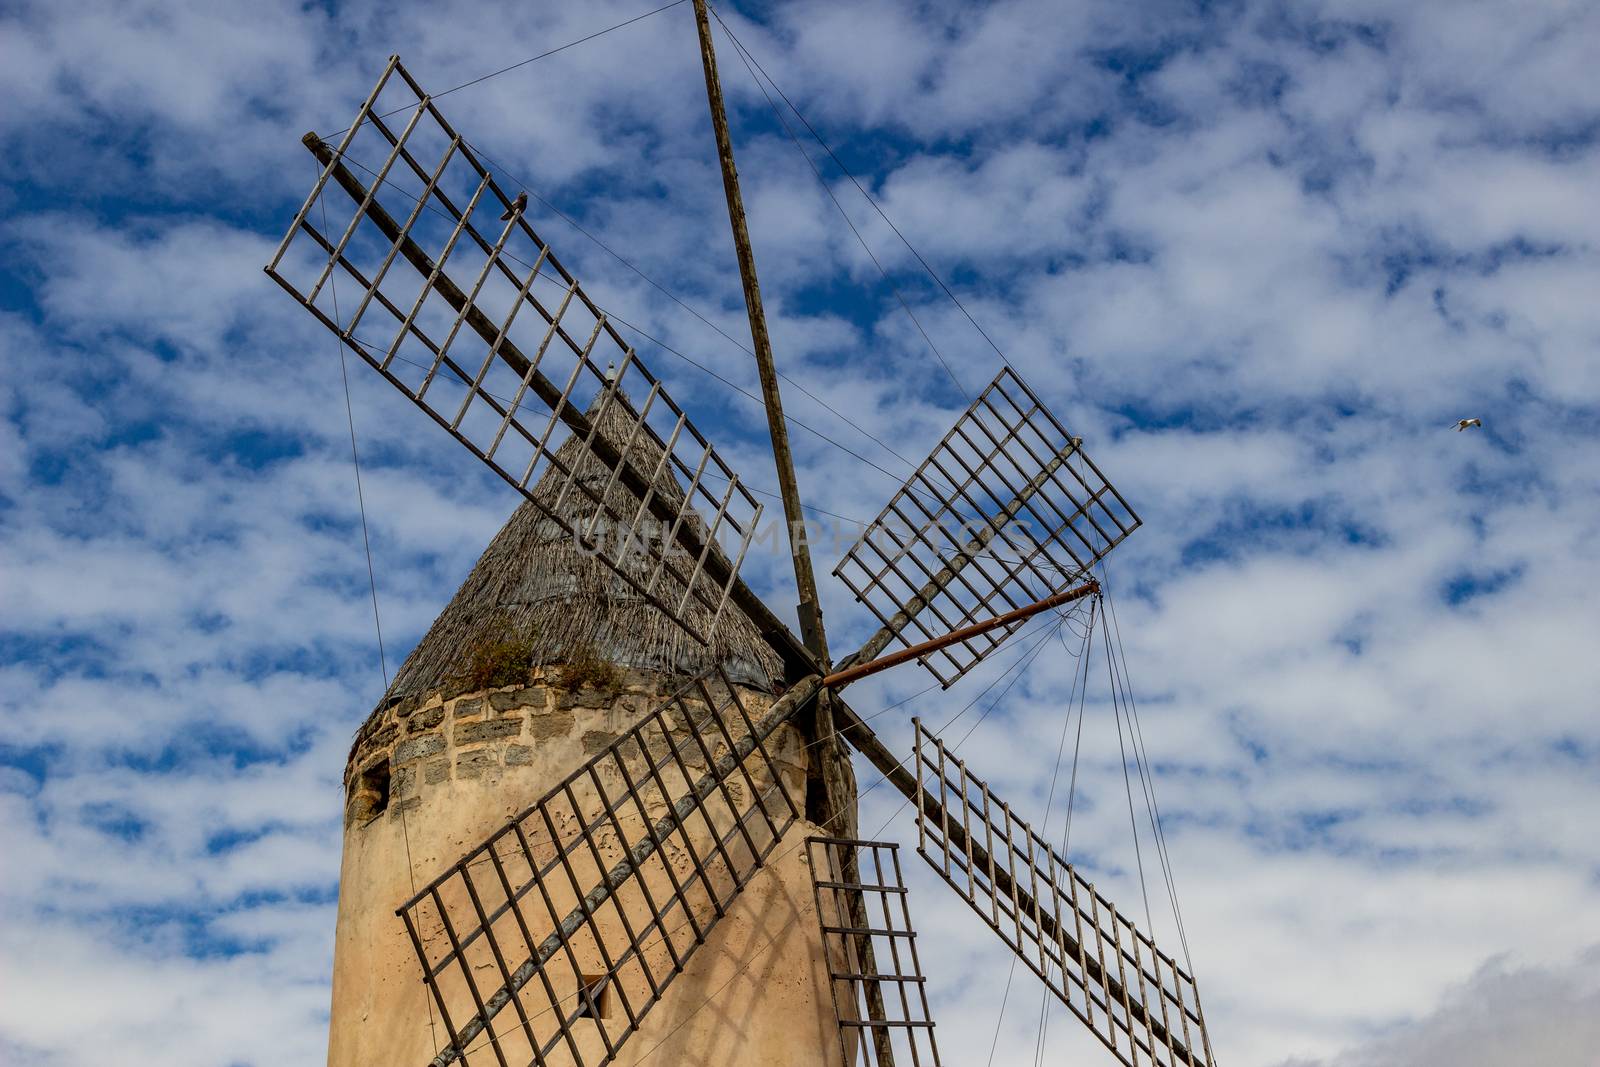 Windmill in Palma on balearic island Mallorca, Spain on a sunny day